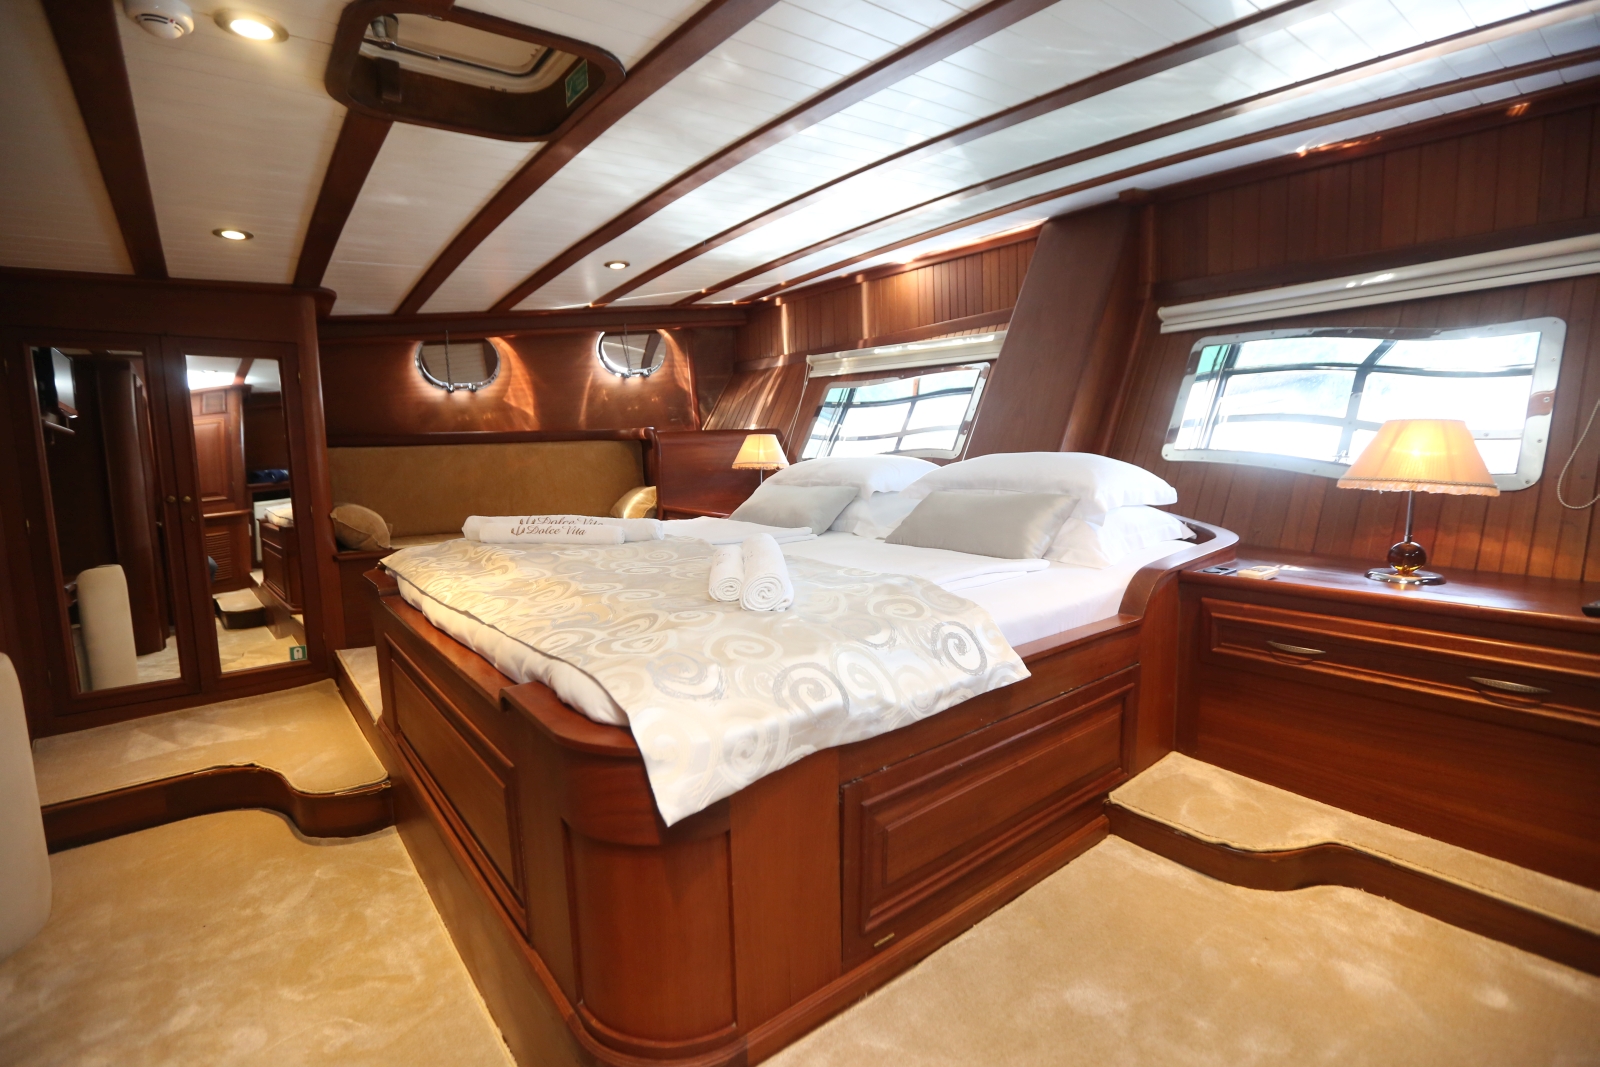 Owner's cabin on board the Dolce Vita gulet in Croatia